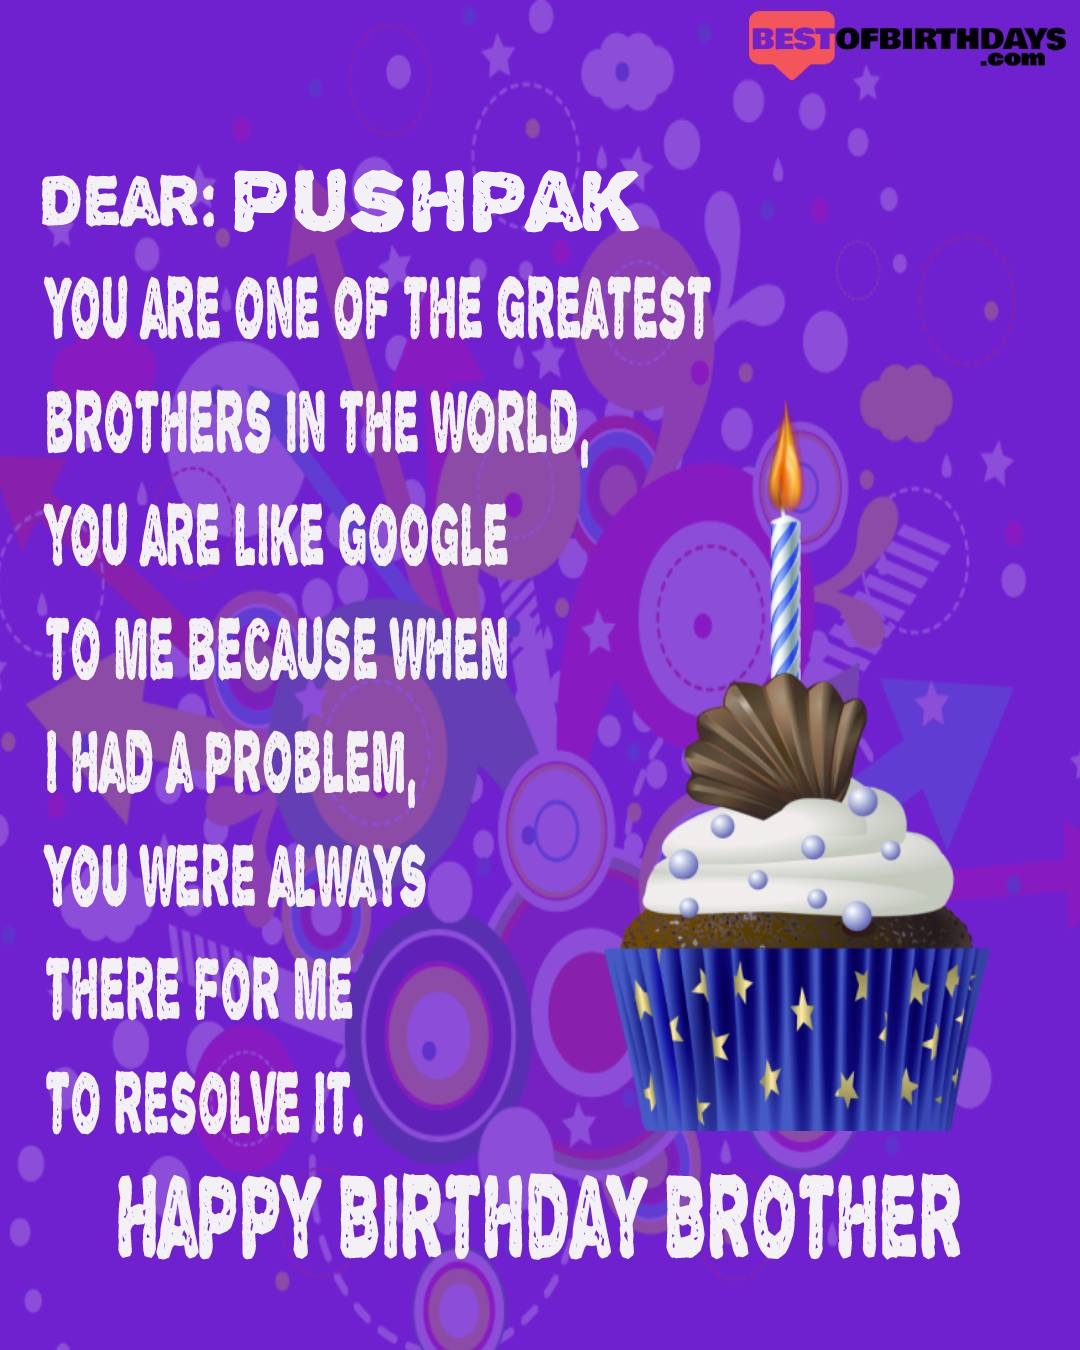 Happy birthday pushpak bhai brother bro